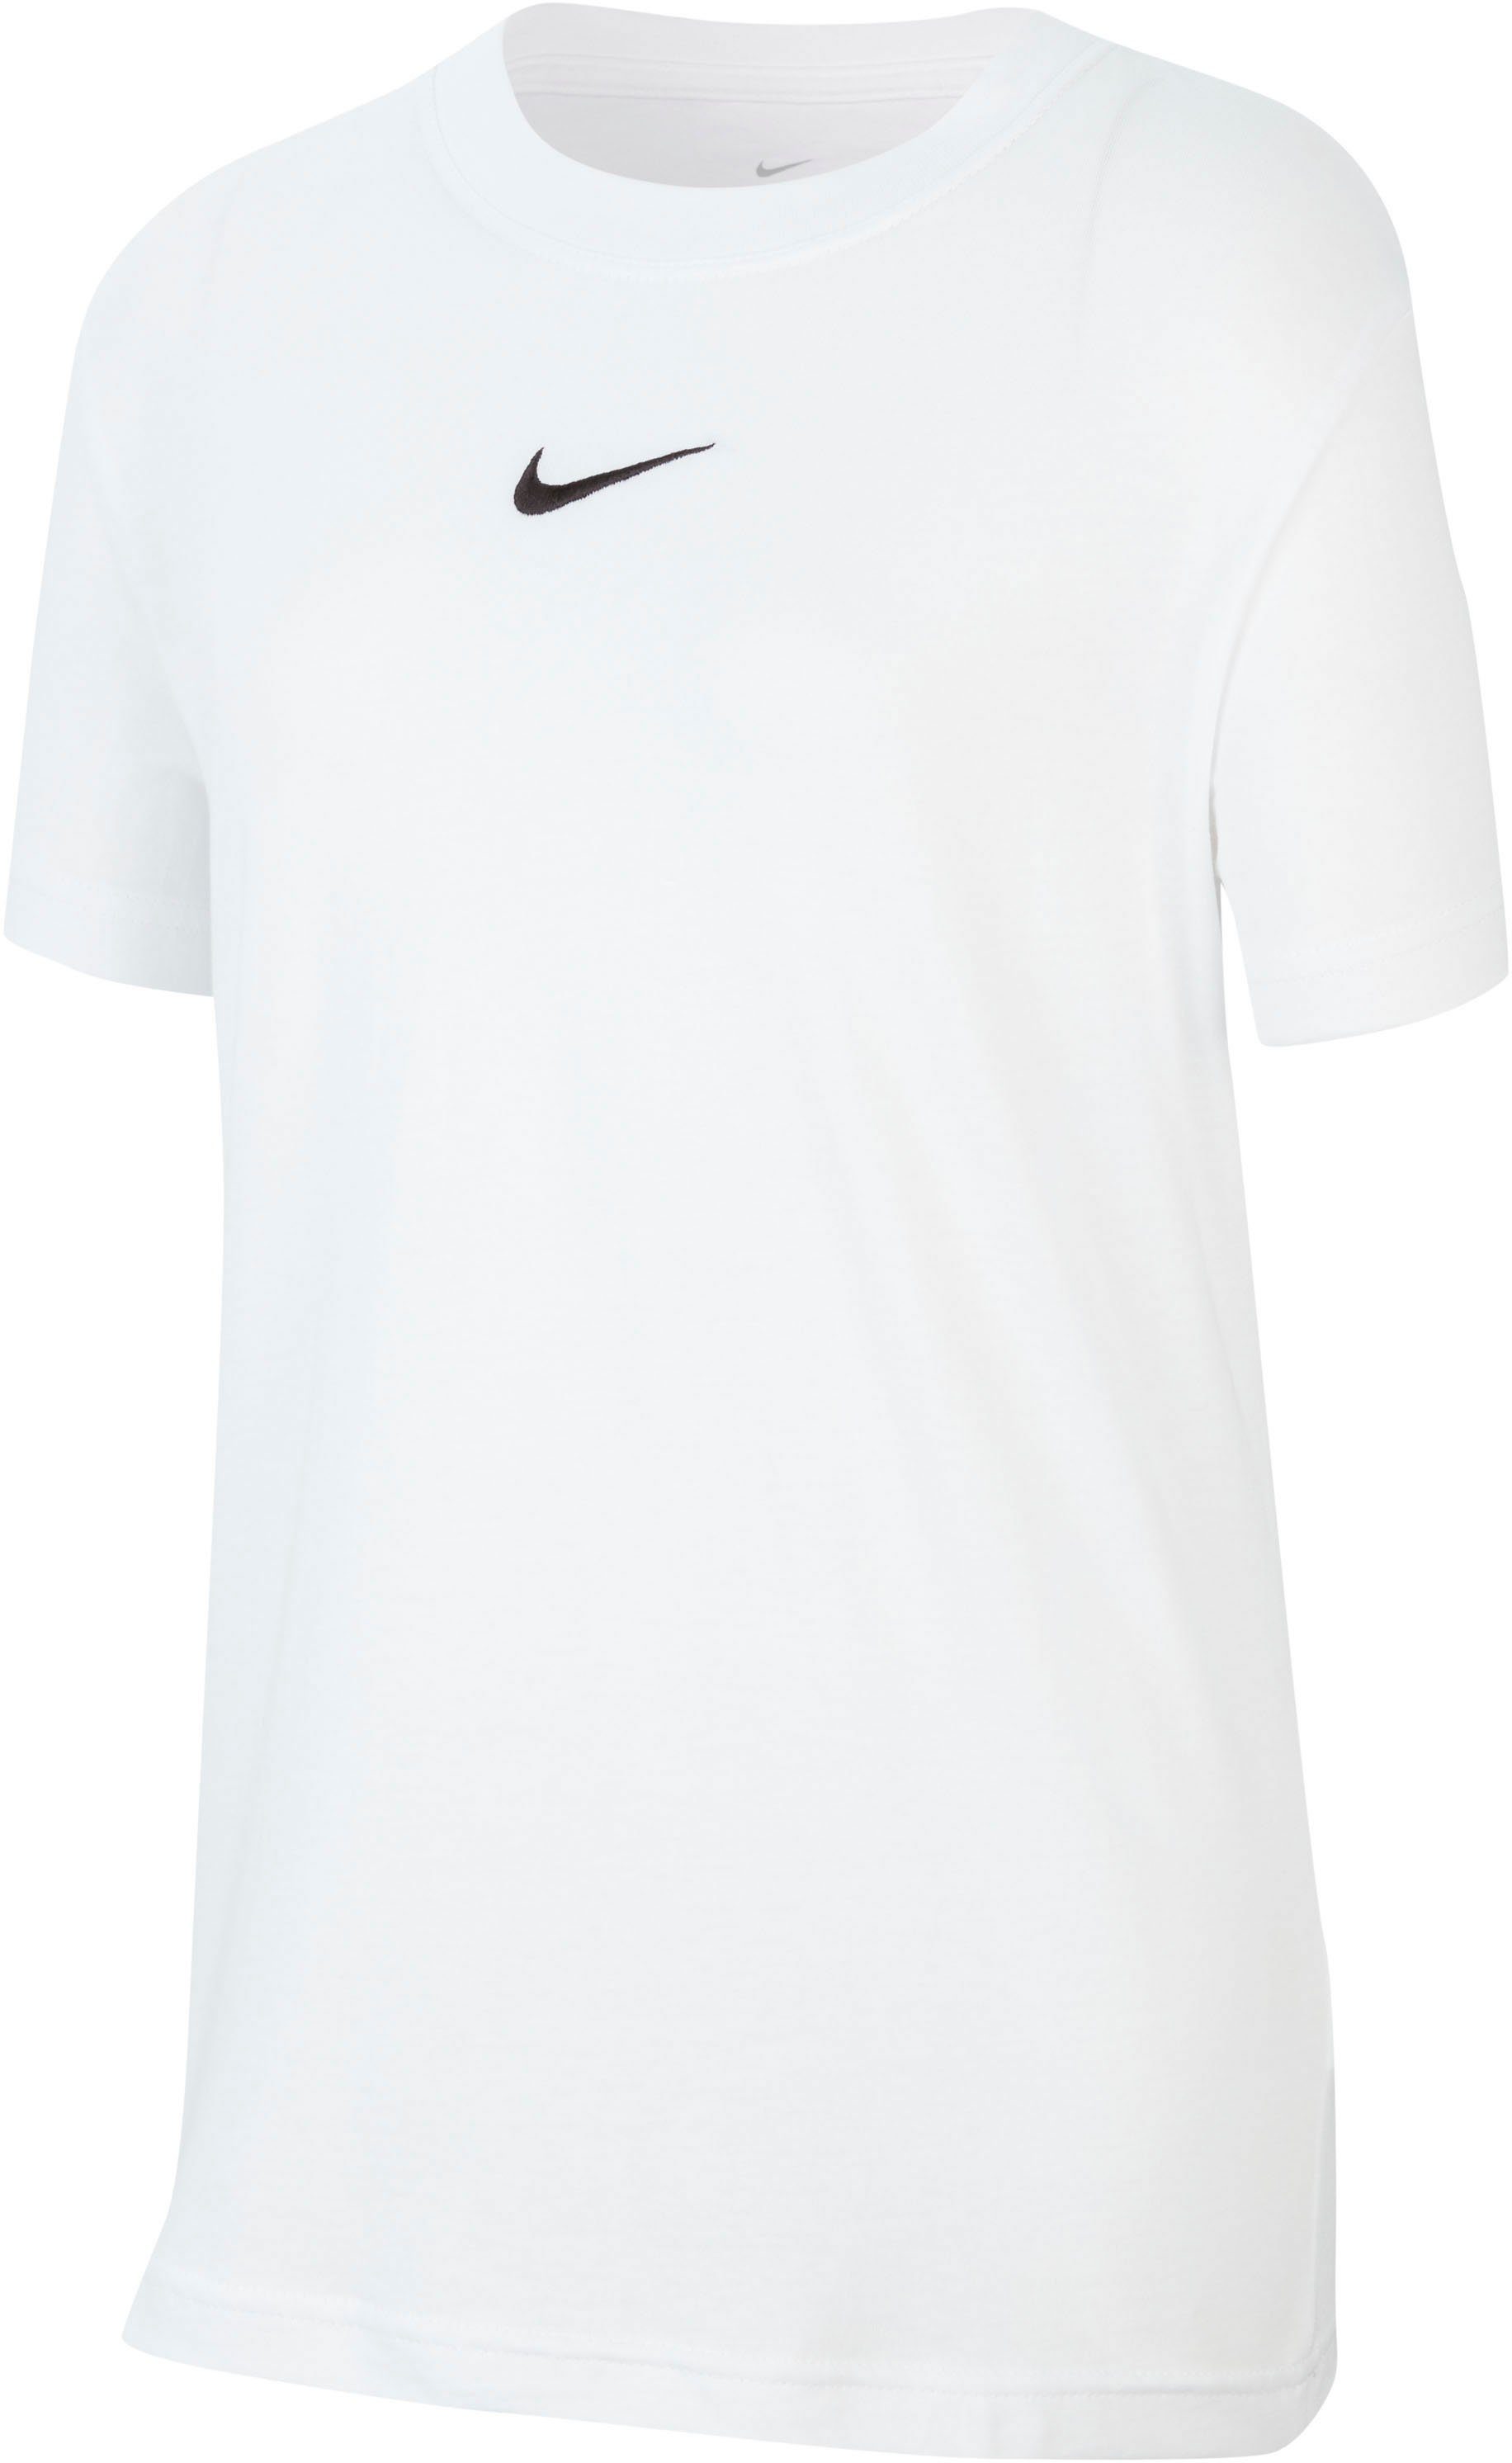 Nike Sportswear T-Shirt Kids' weiß (Girls) Big T-Shirt